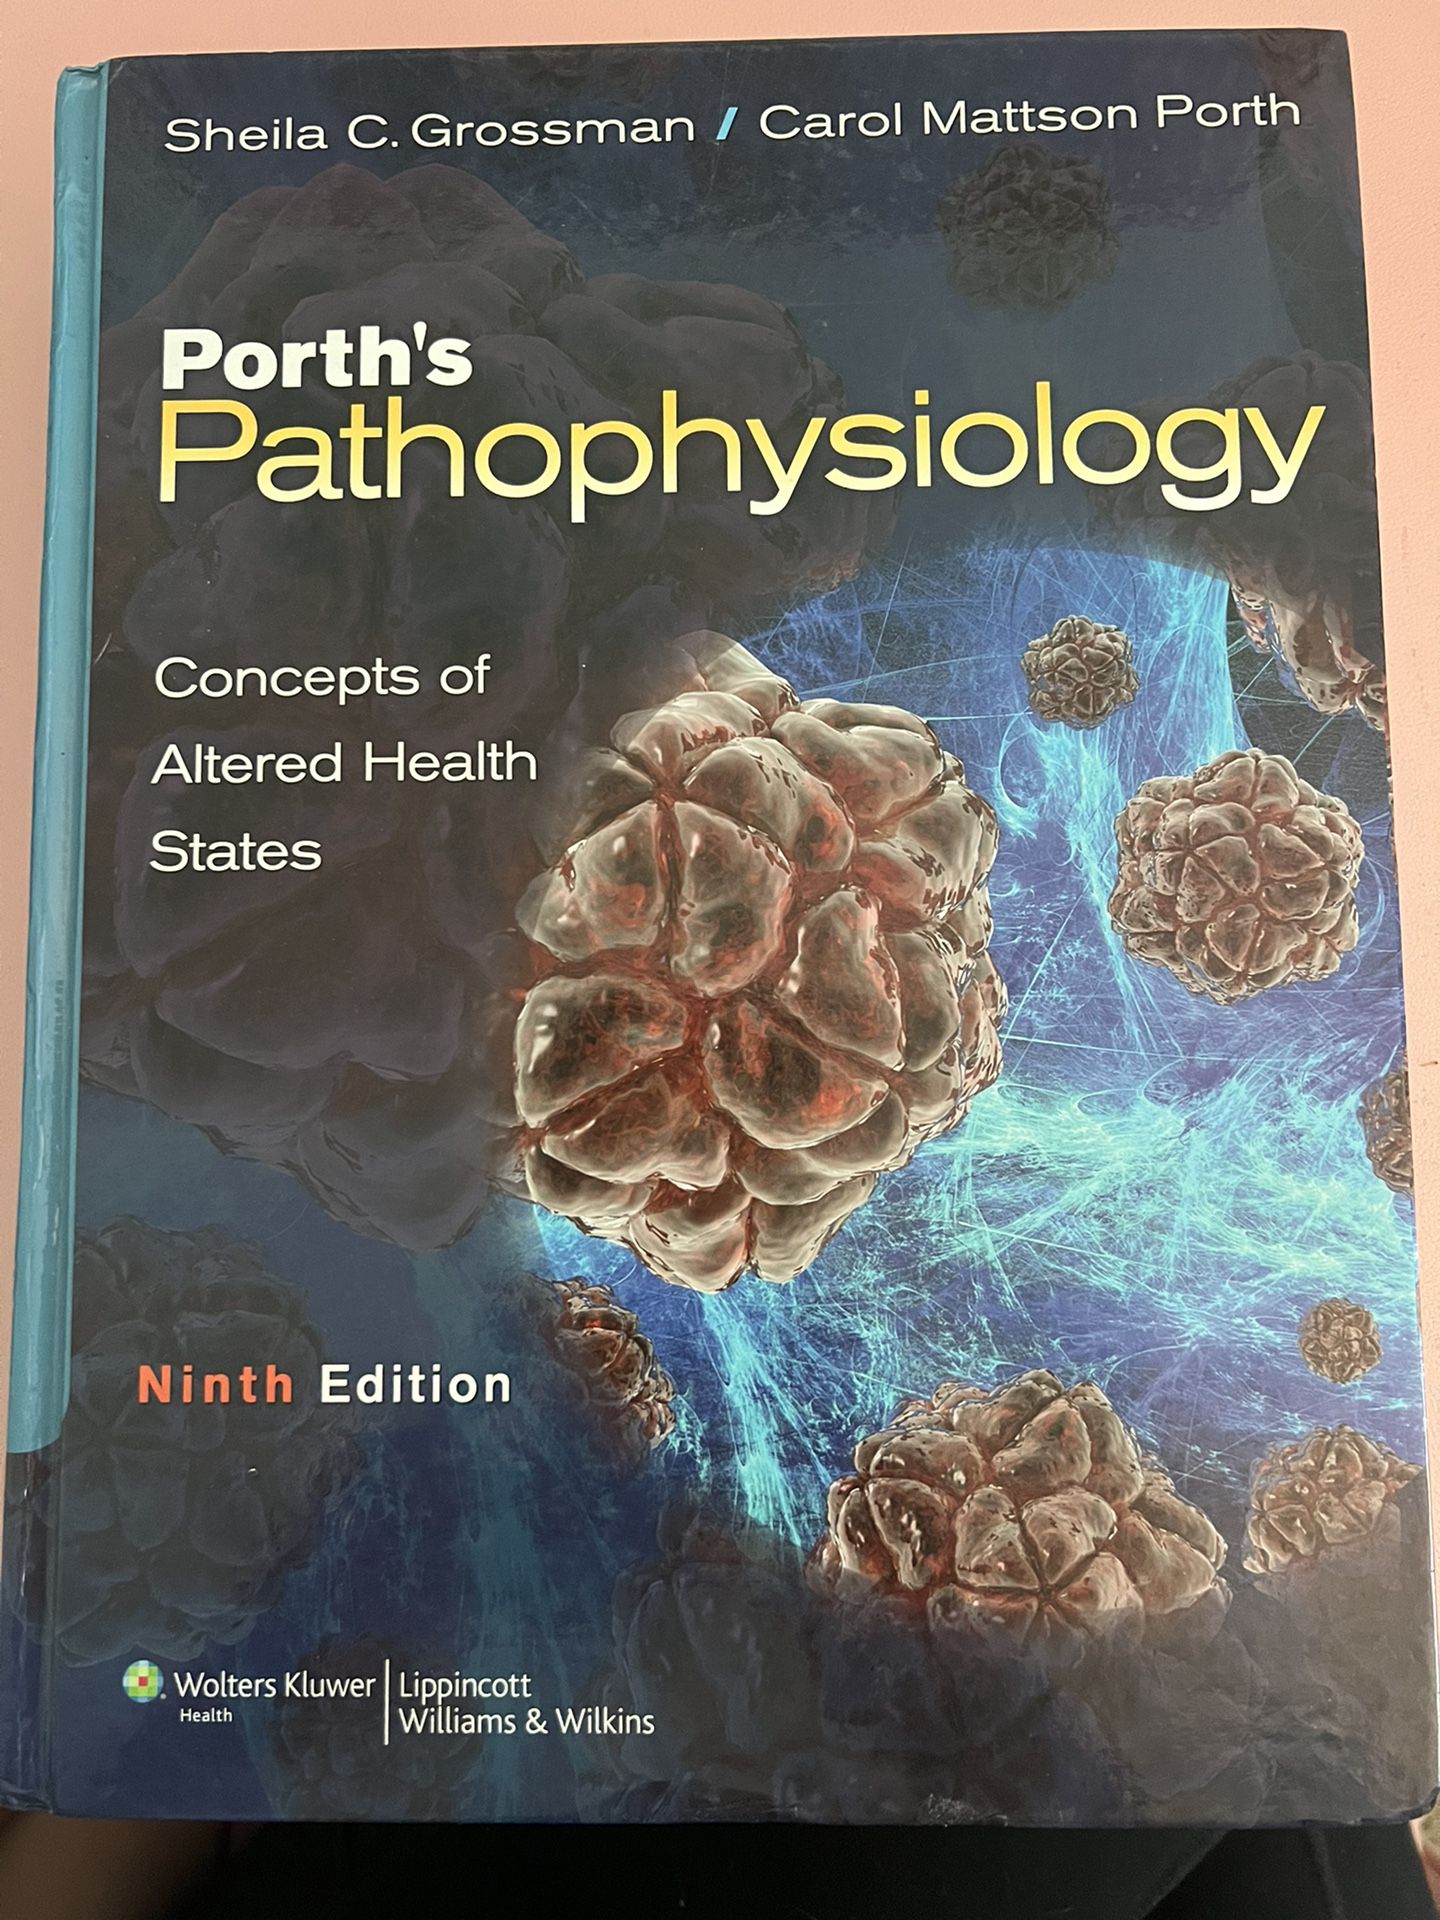 Porth’s Pathophysiology 9th Ed.